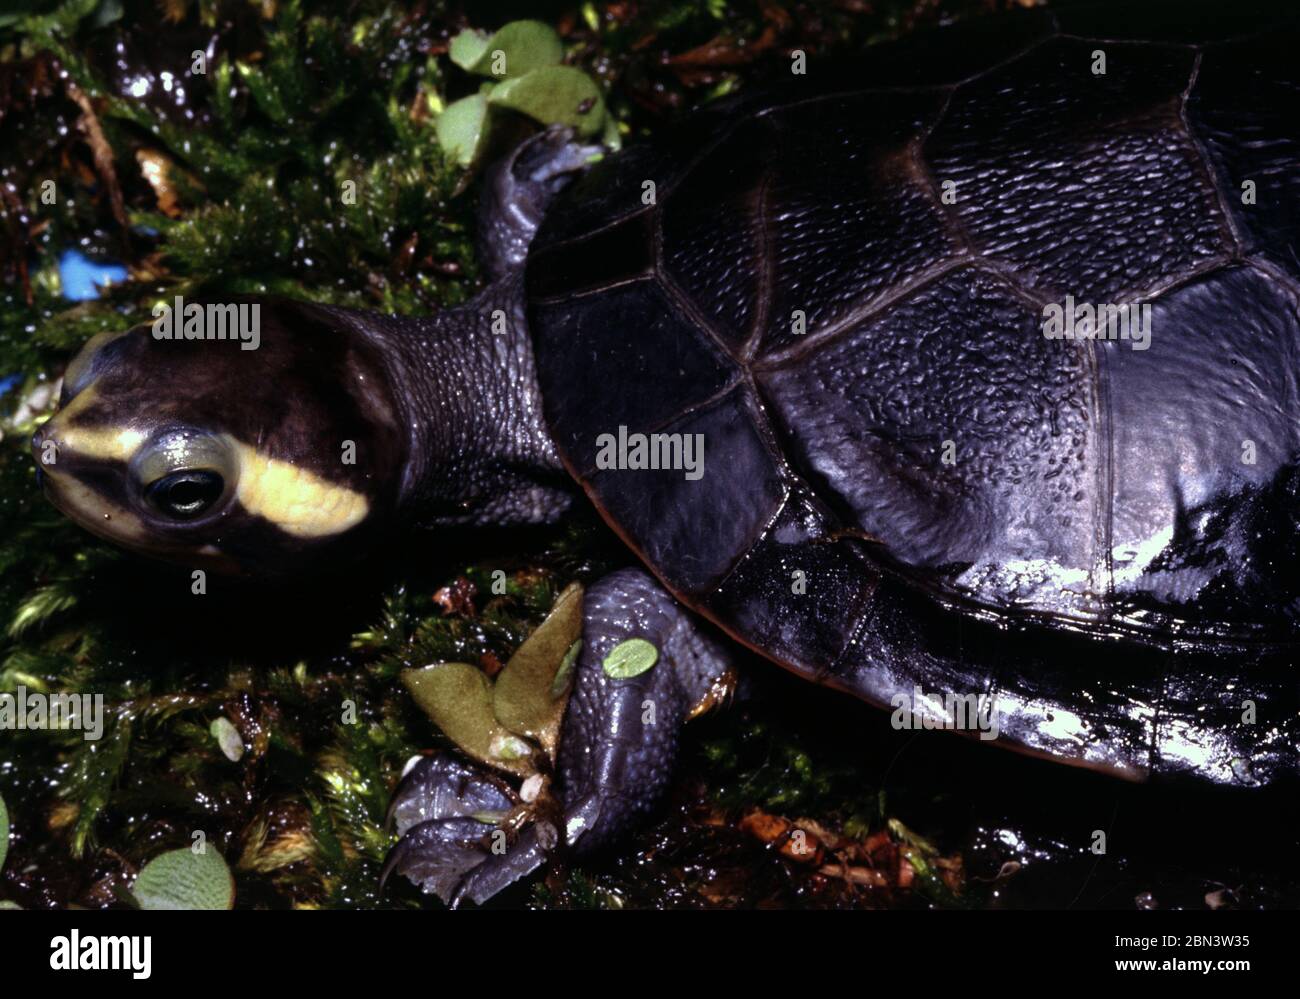 Red-bellied short-necked turtle (Emydura subglobosa) Stock Photo